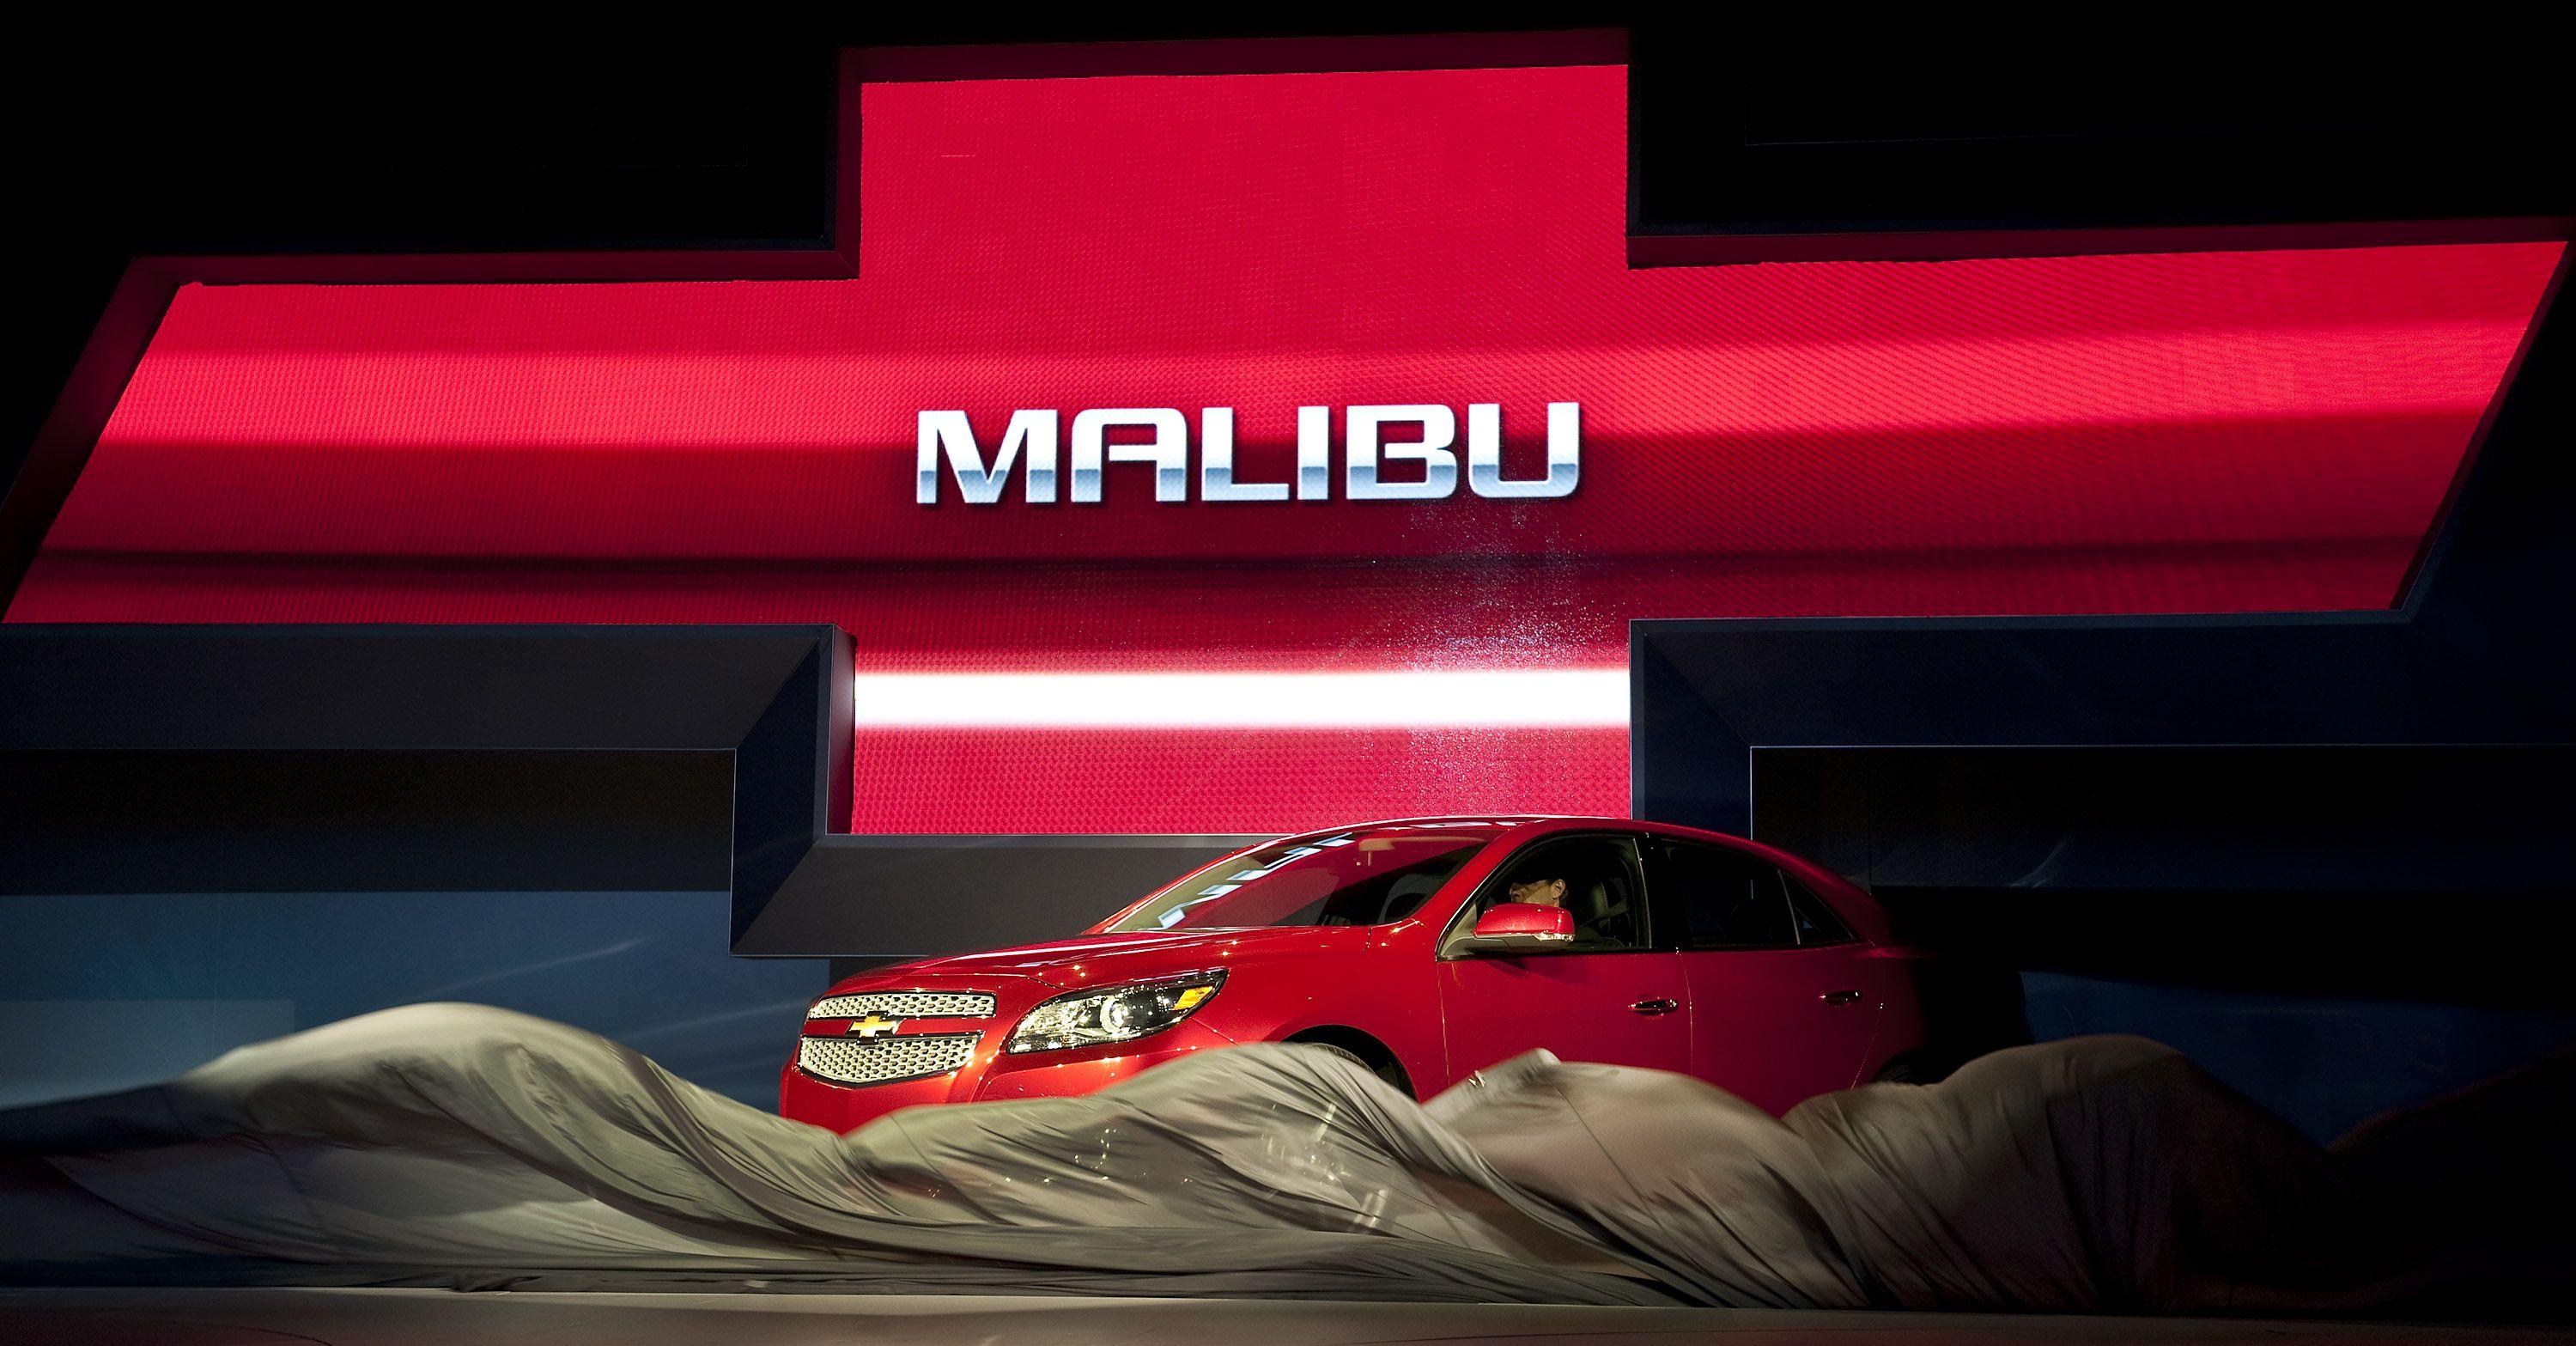 Chevrolet Malibu Logo - Chevrolet Malibu at Bob Maguire Chevy. The Maguire Auto Blog